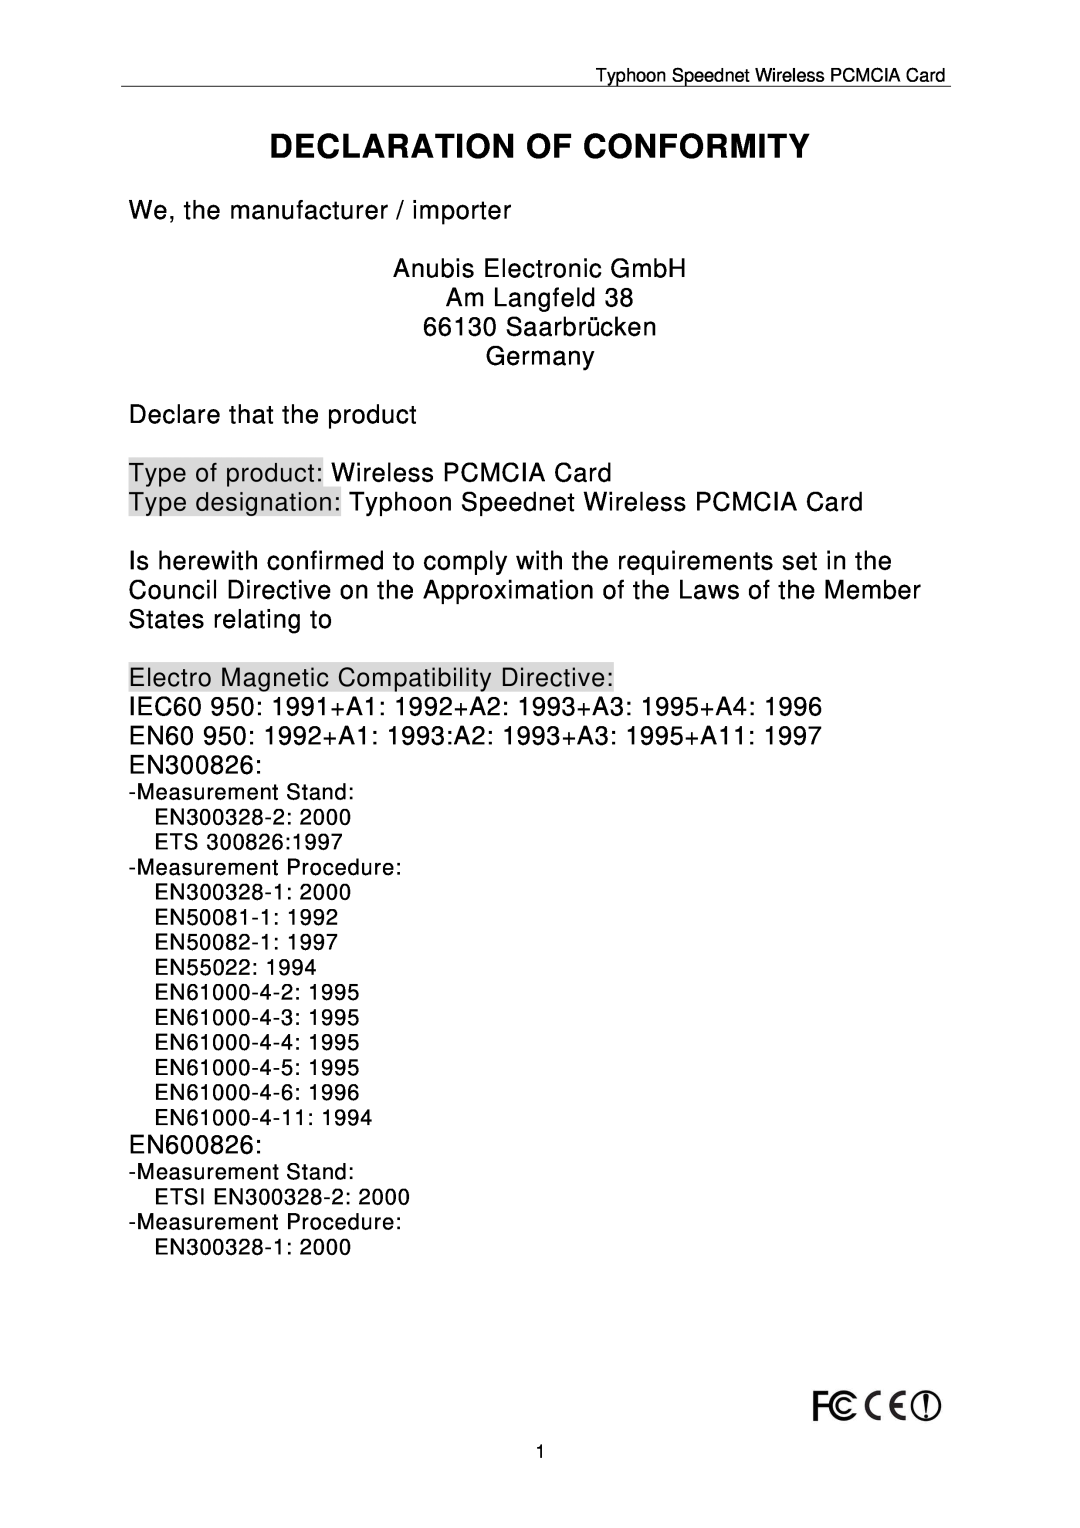 ANUBIS SPEEDNET WIRELESS PCMCIA CARD instruction manual Declaration Of Conformity 